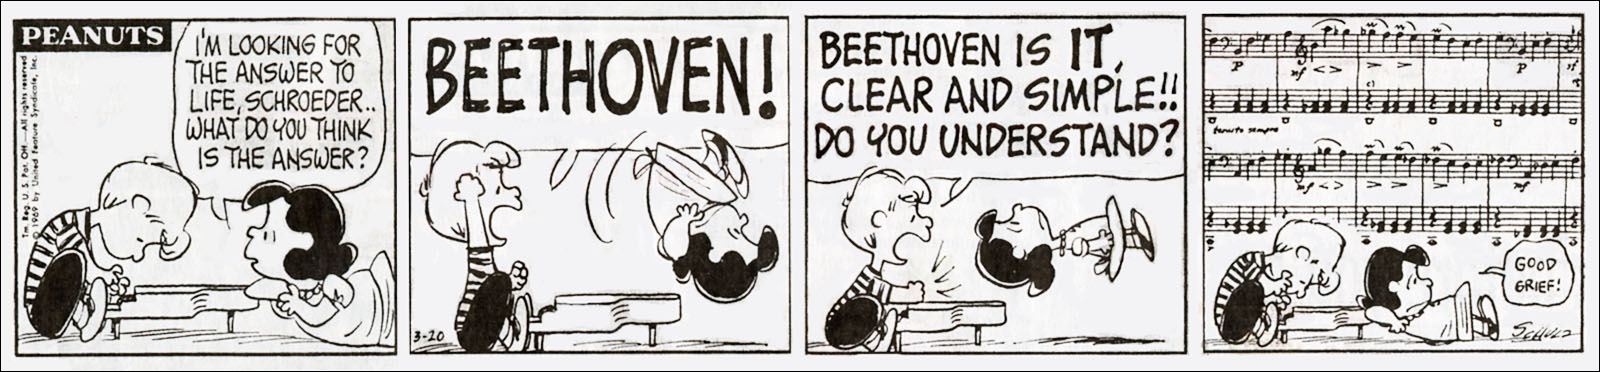 Beethoven(1600x372).jpg